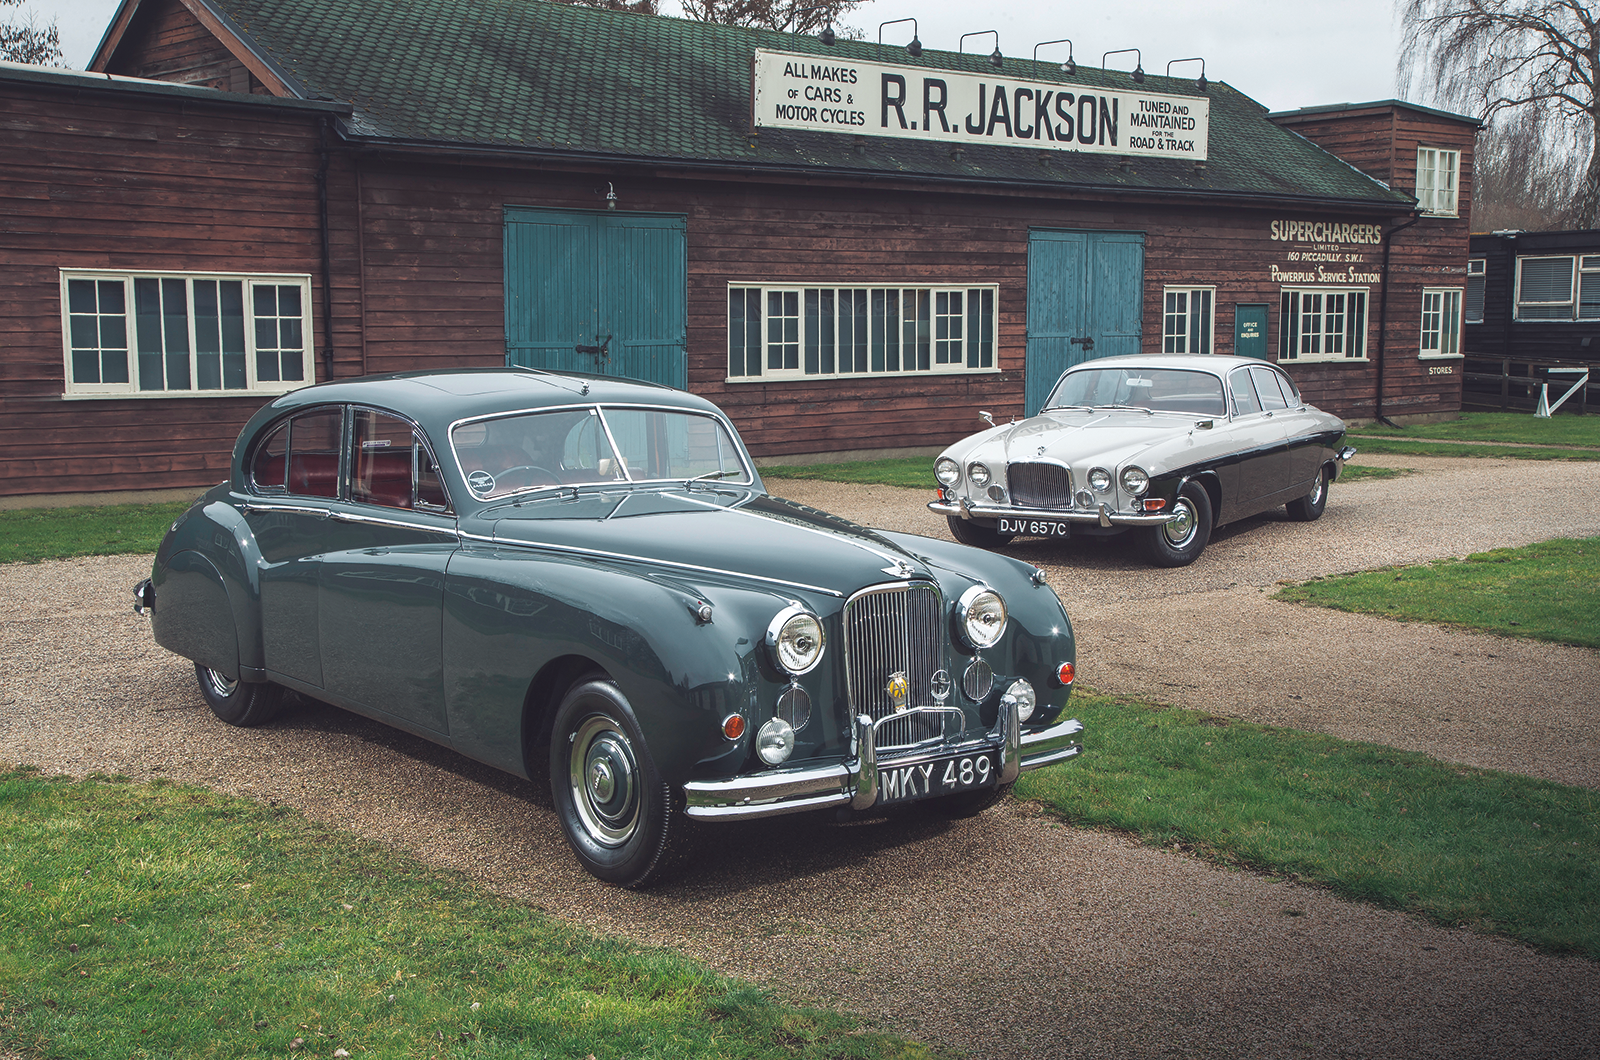 Classic & Sports Car – When size matters: Jaguar MkVIIM vs MkX